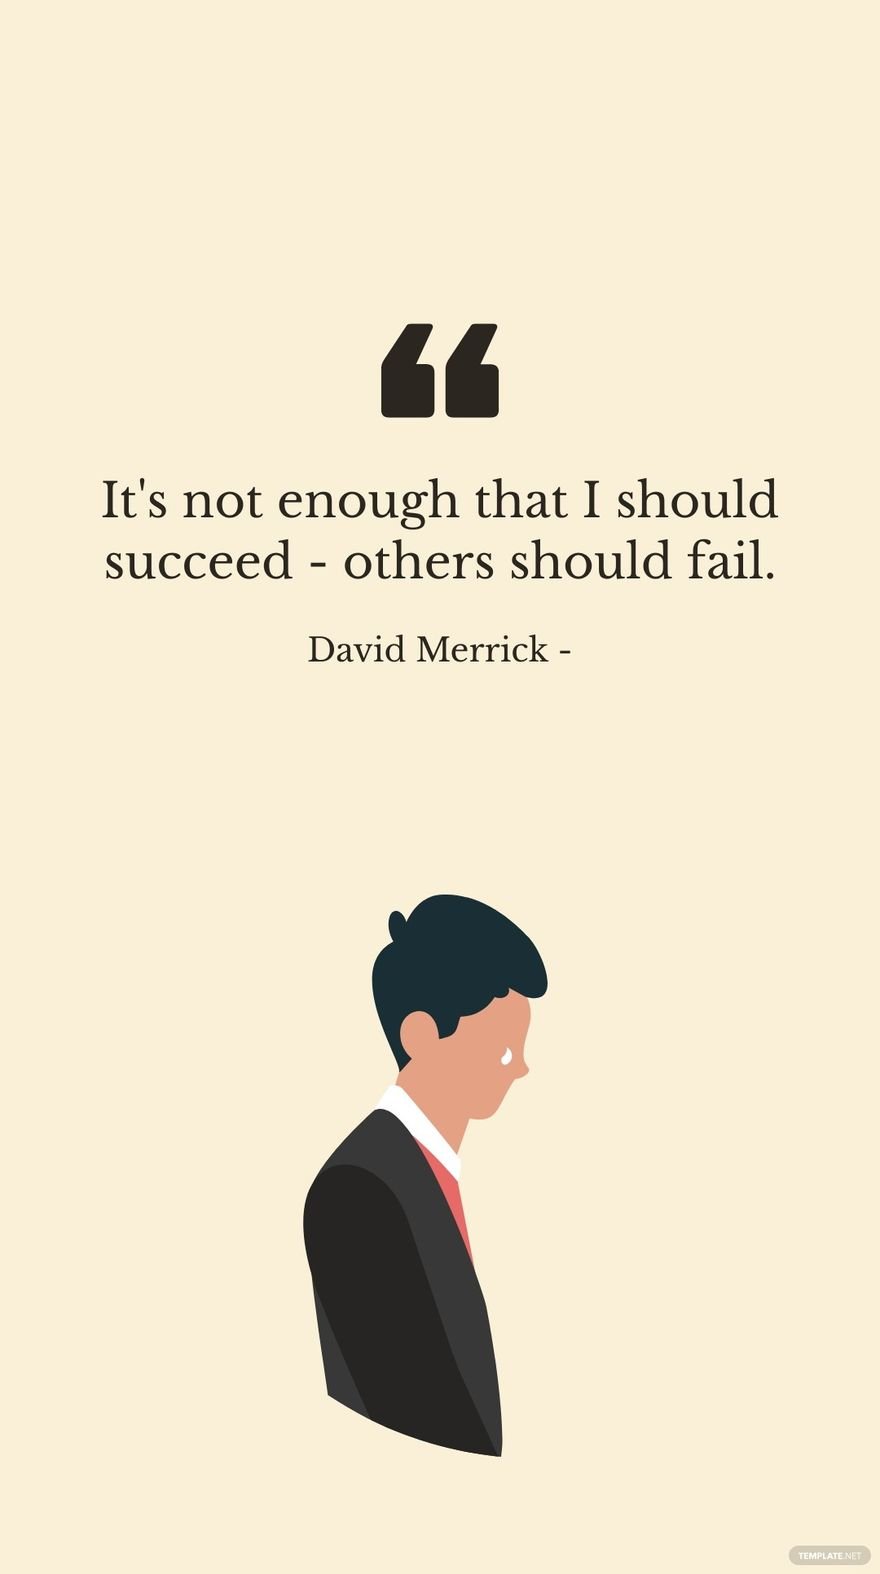 David Merrick - It's not enough that I should succeed - others should fail.